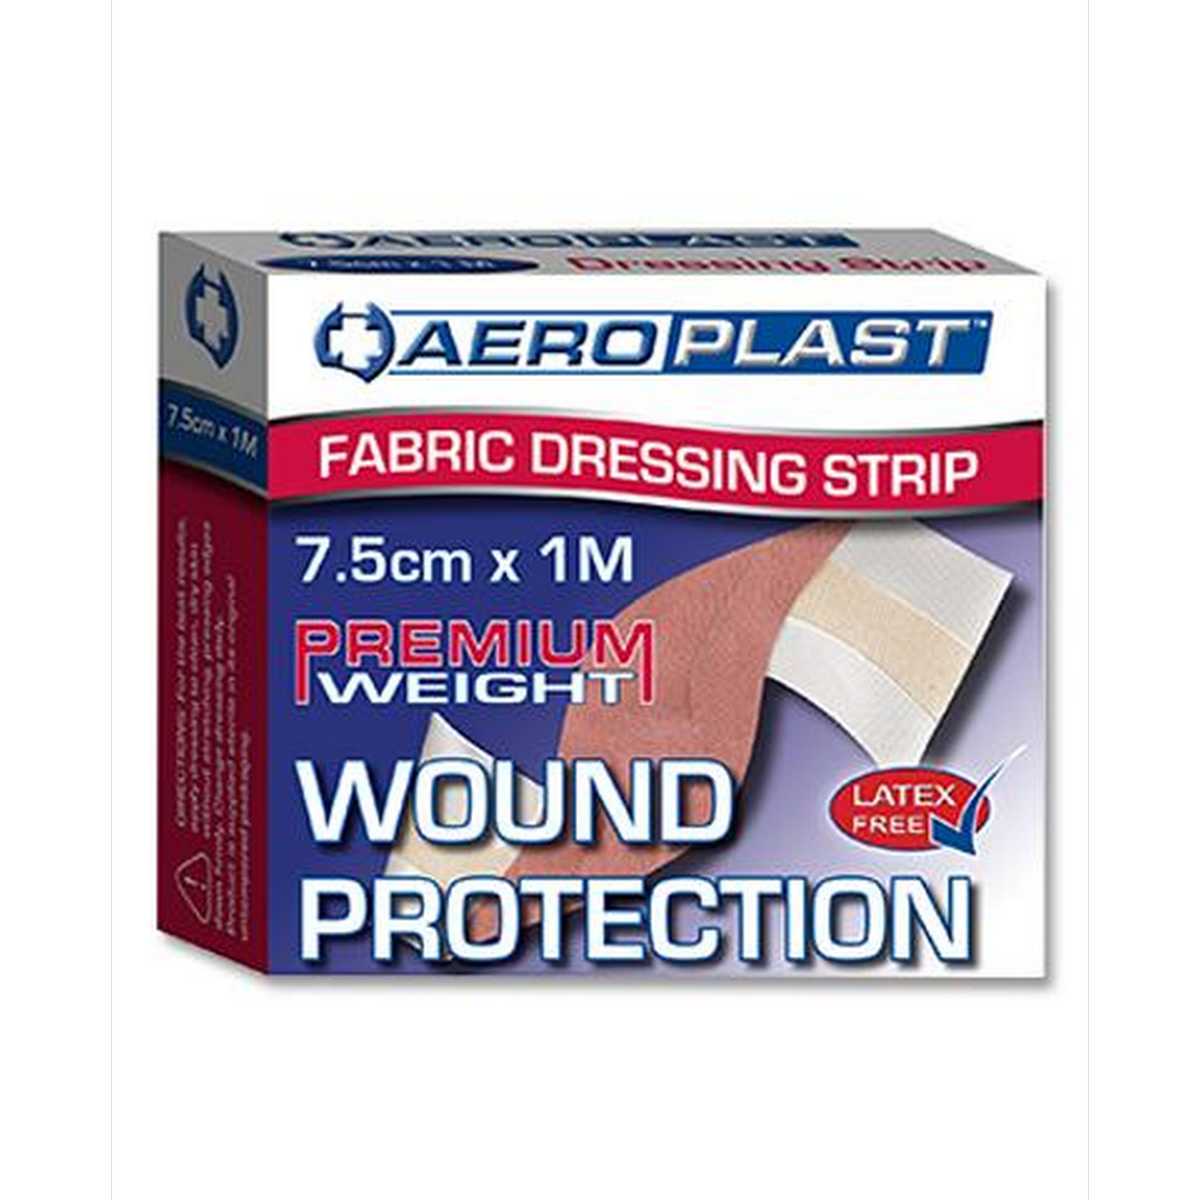 Aeroplast Fabric Dressing Strip 7.5cm x 1m